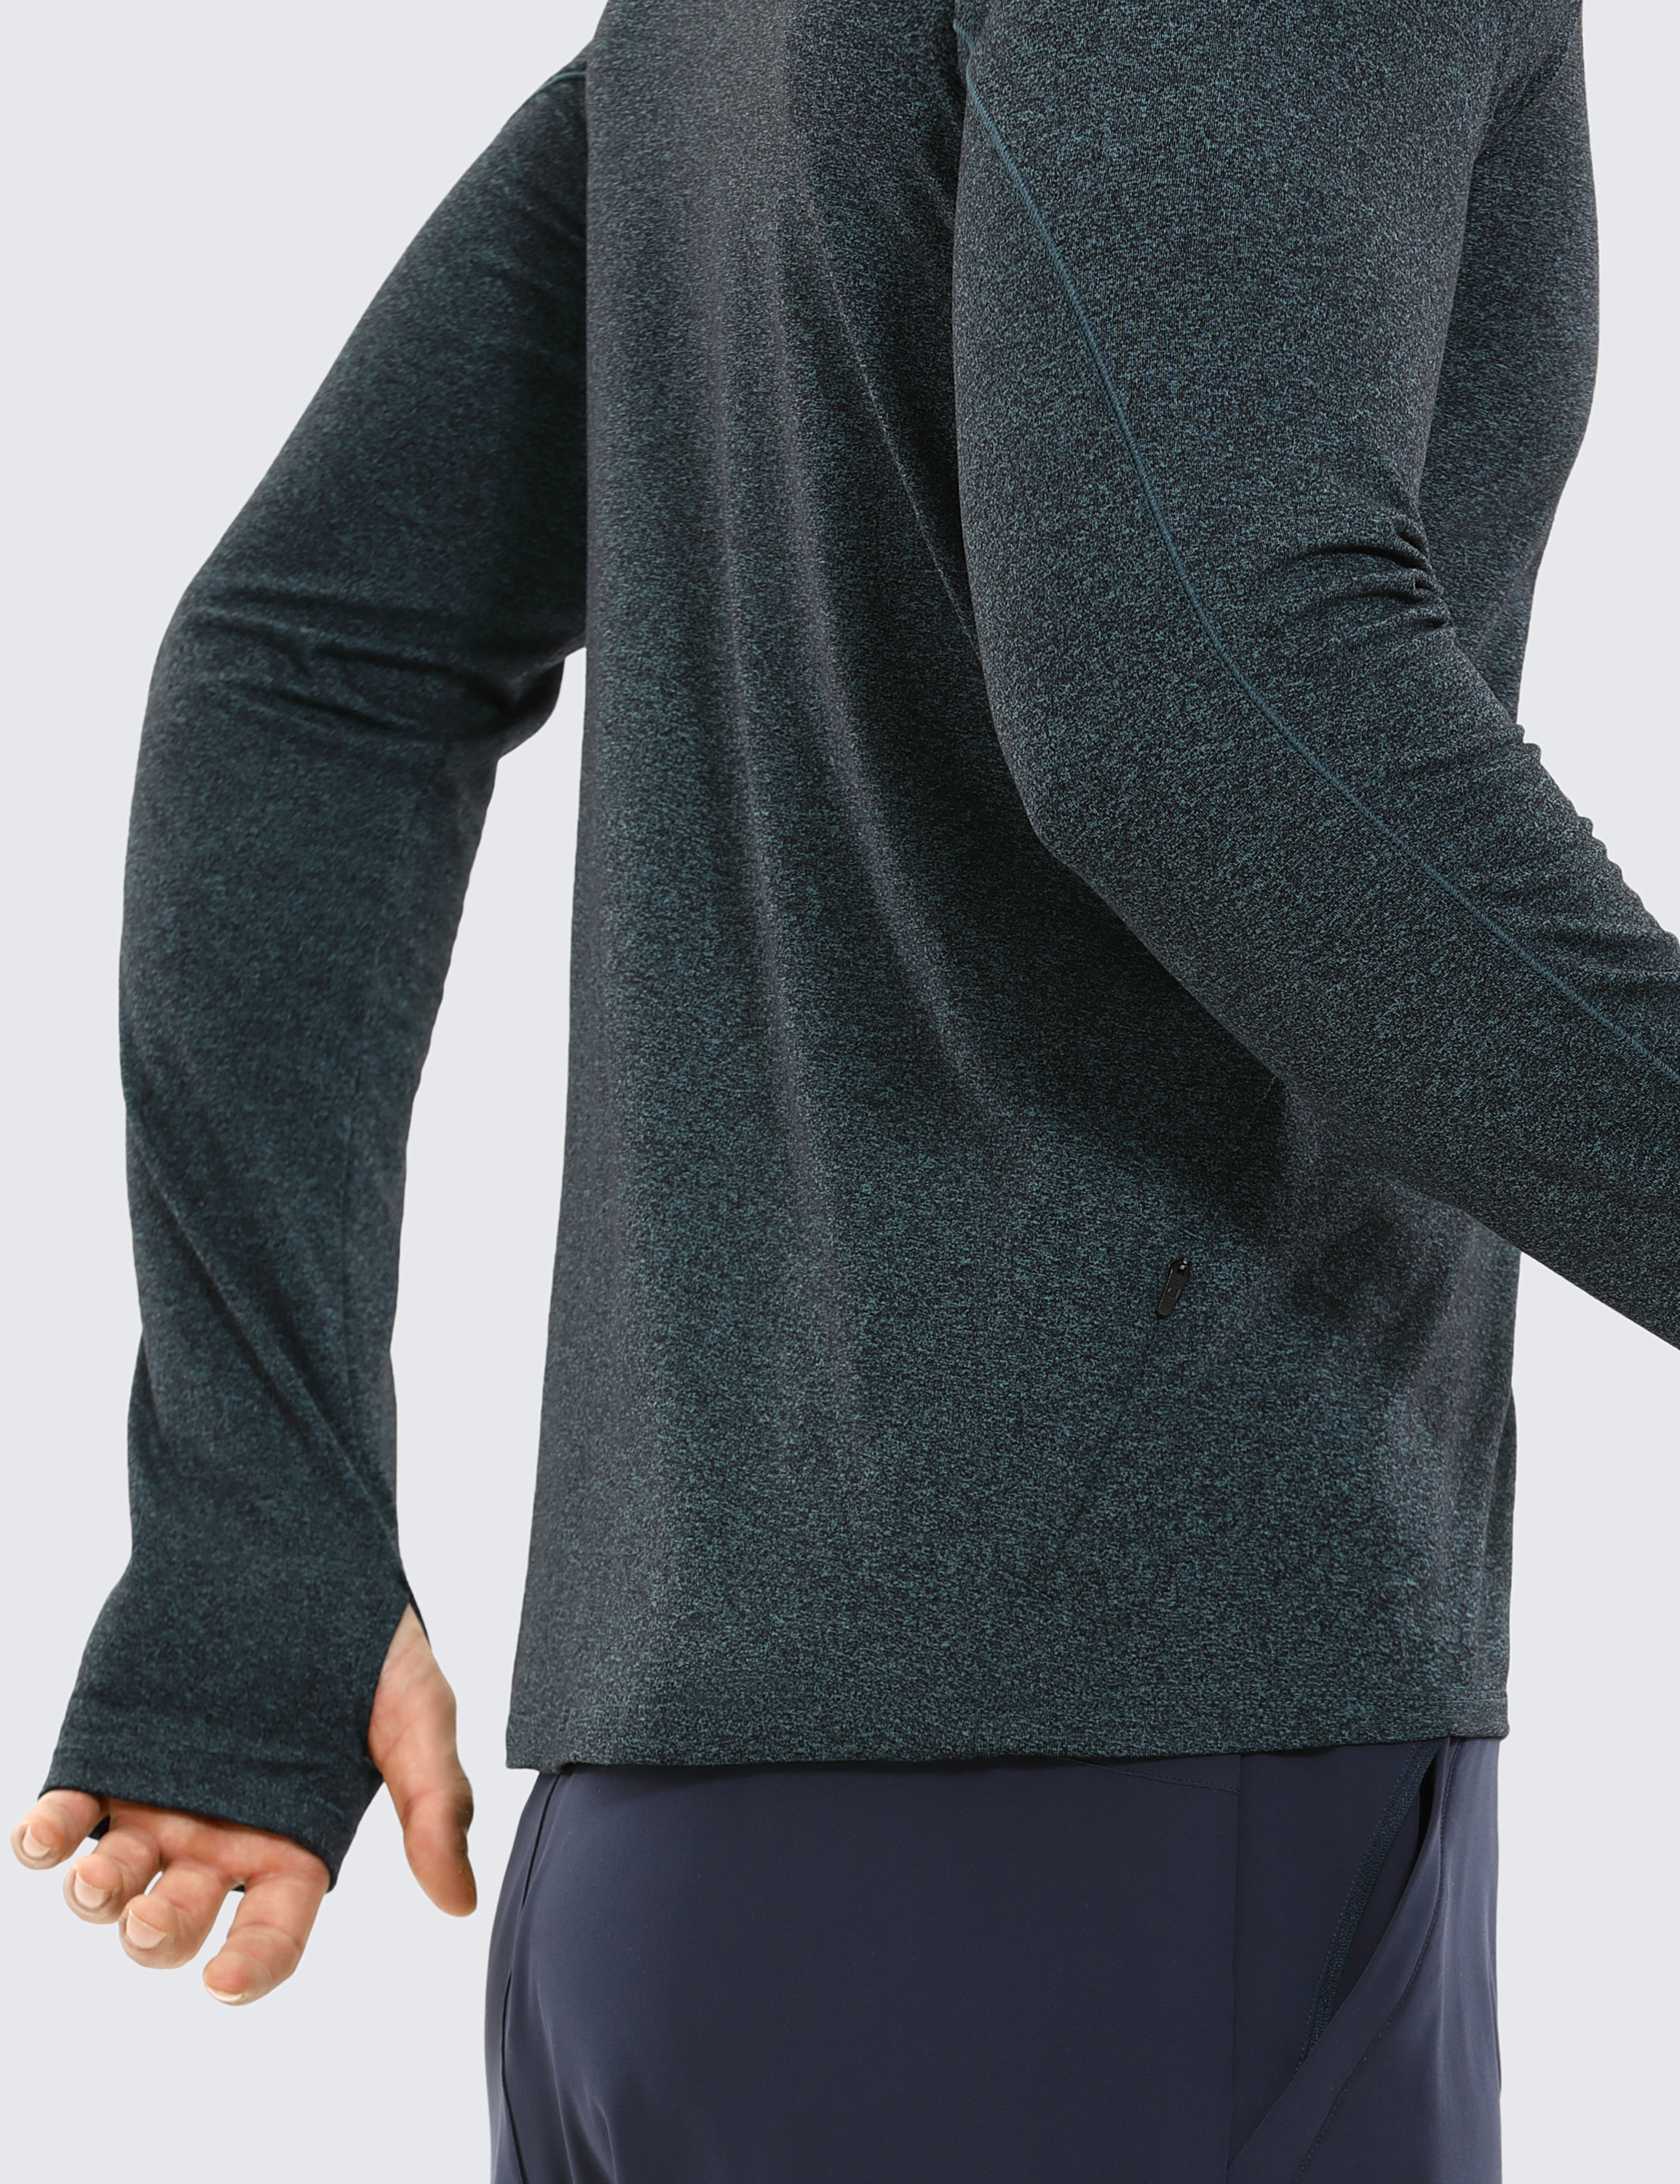 CRZ YOGA Men's Half Zip Pullover Athletic Tee Shirts Workout Running  Sweatshirt